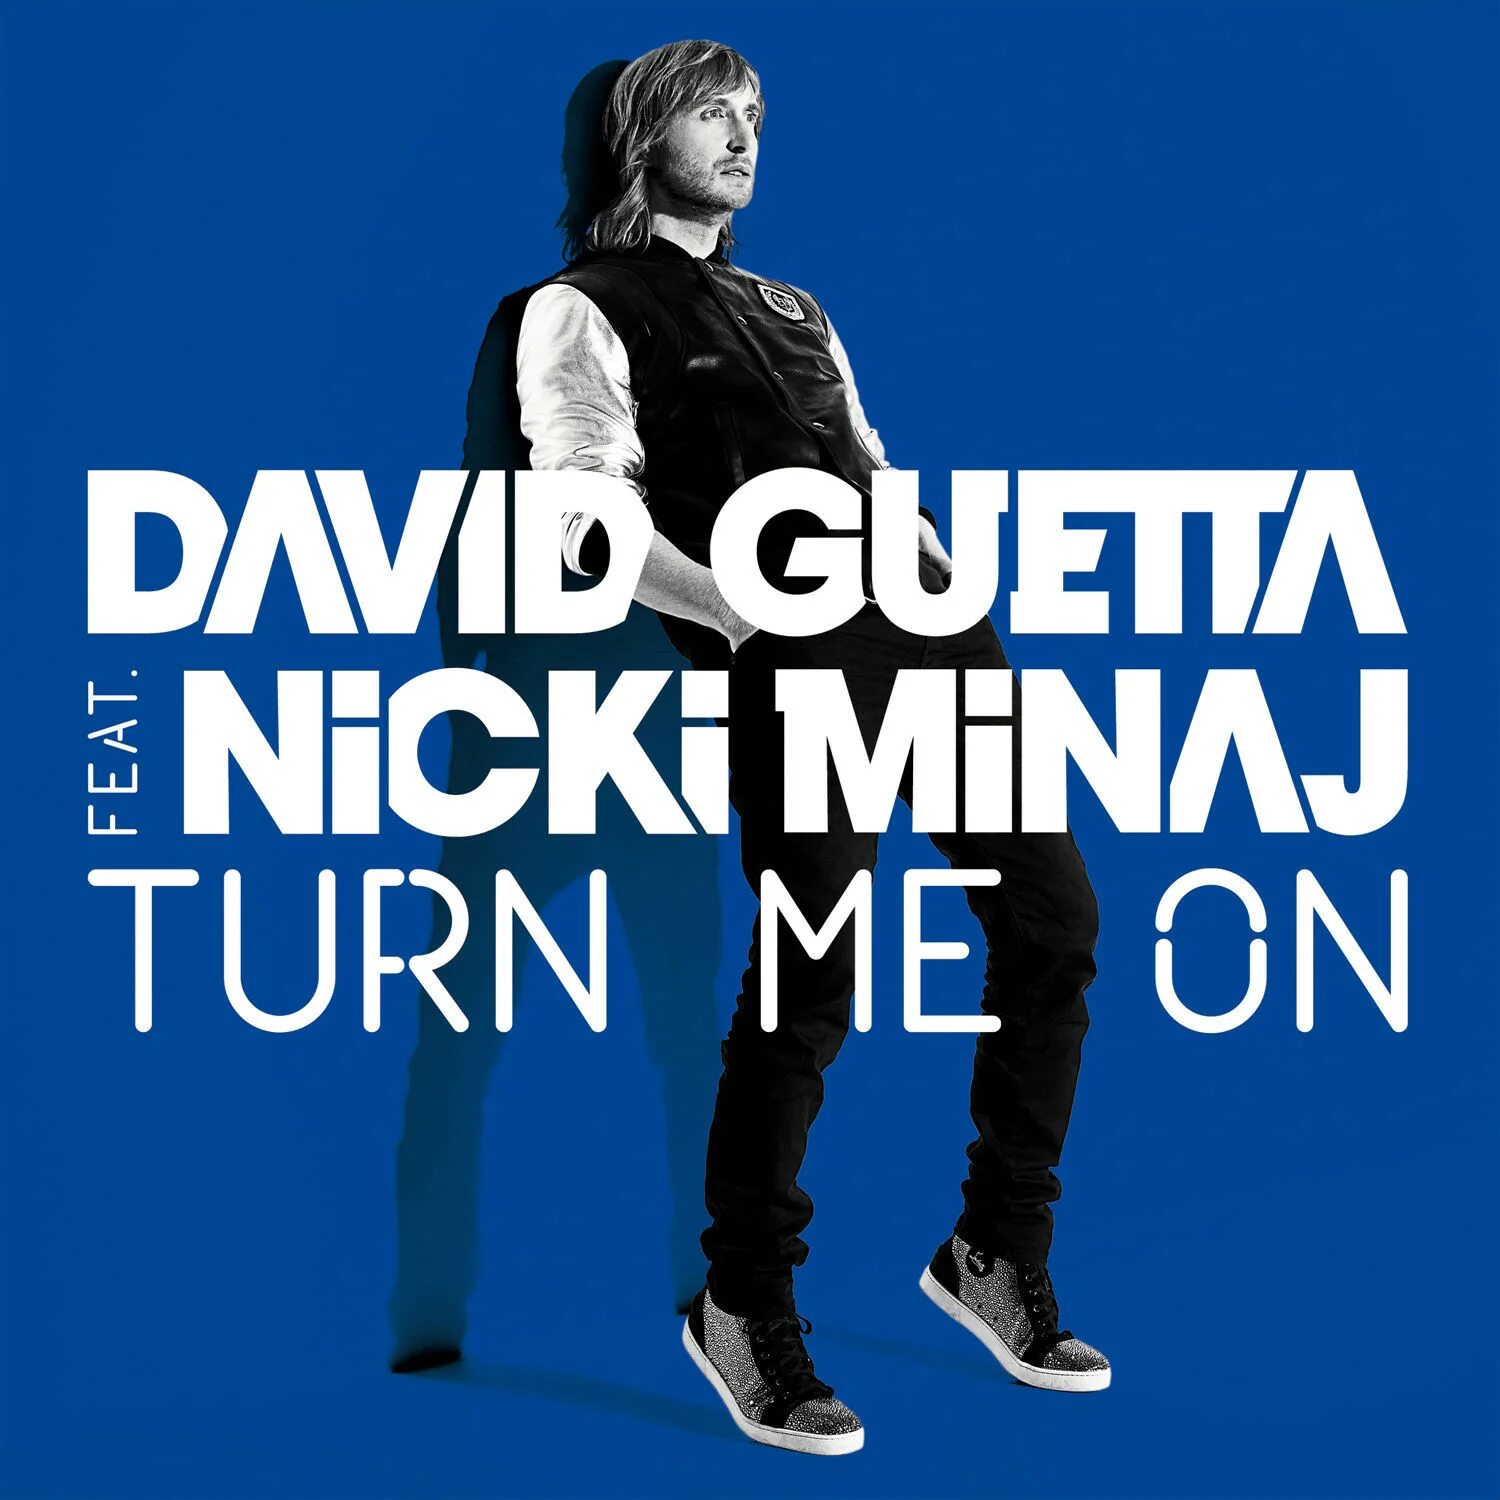 David guetta hurt me. David Guetta turn me on. David Guetta feat. Nicki Minaj - turn me on. David Guetta Nicki Minaj. David Guetta ремикс.